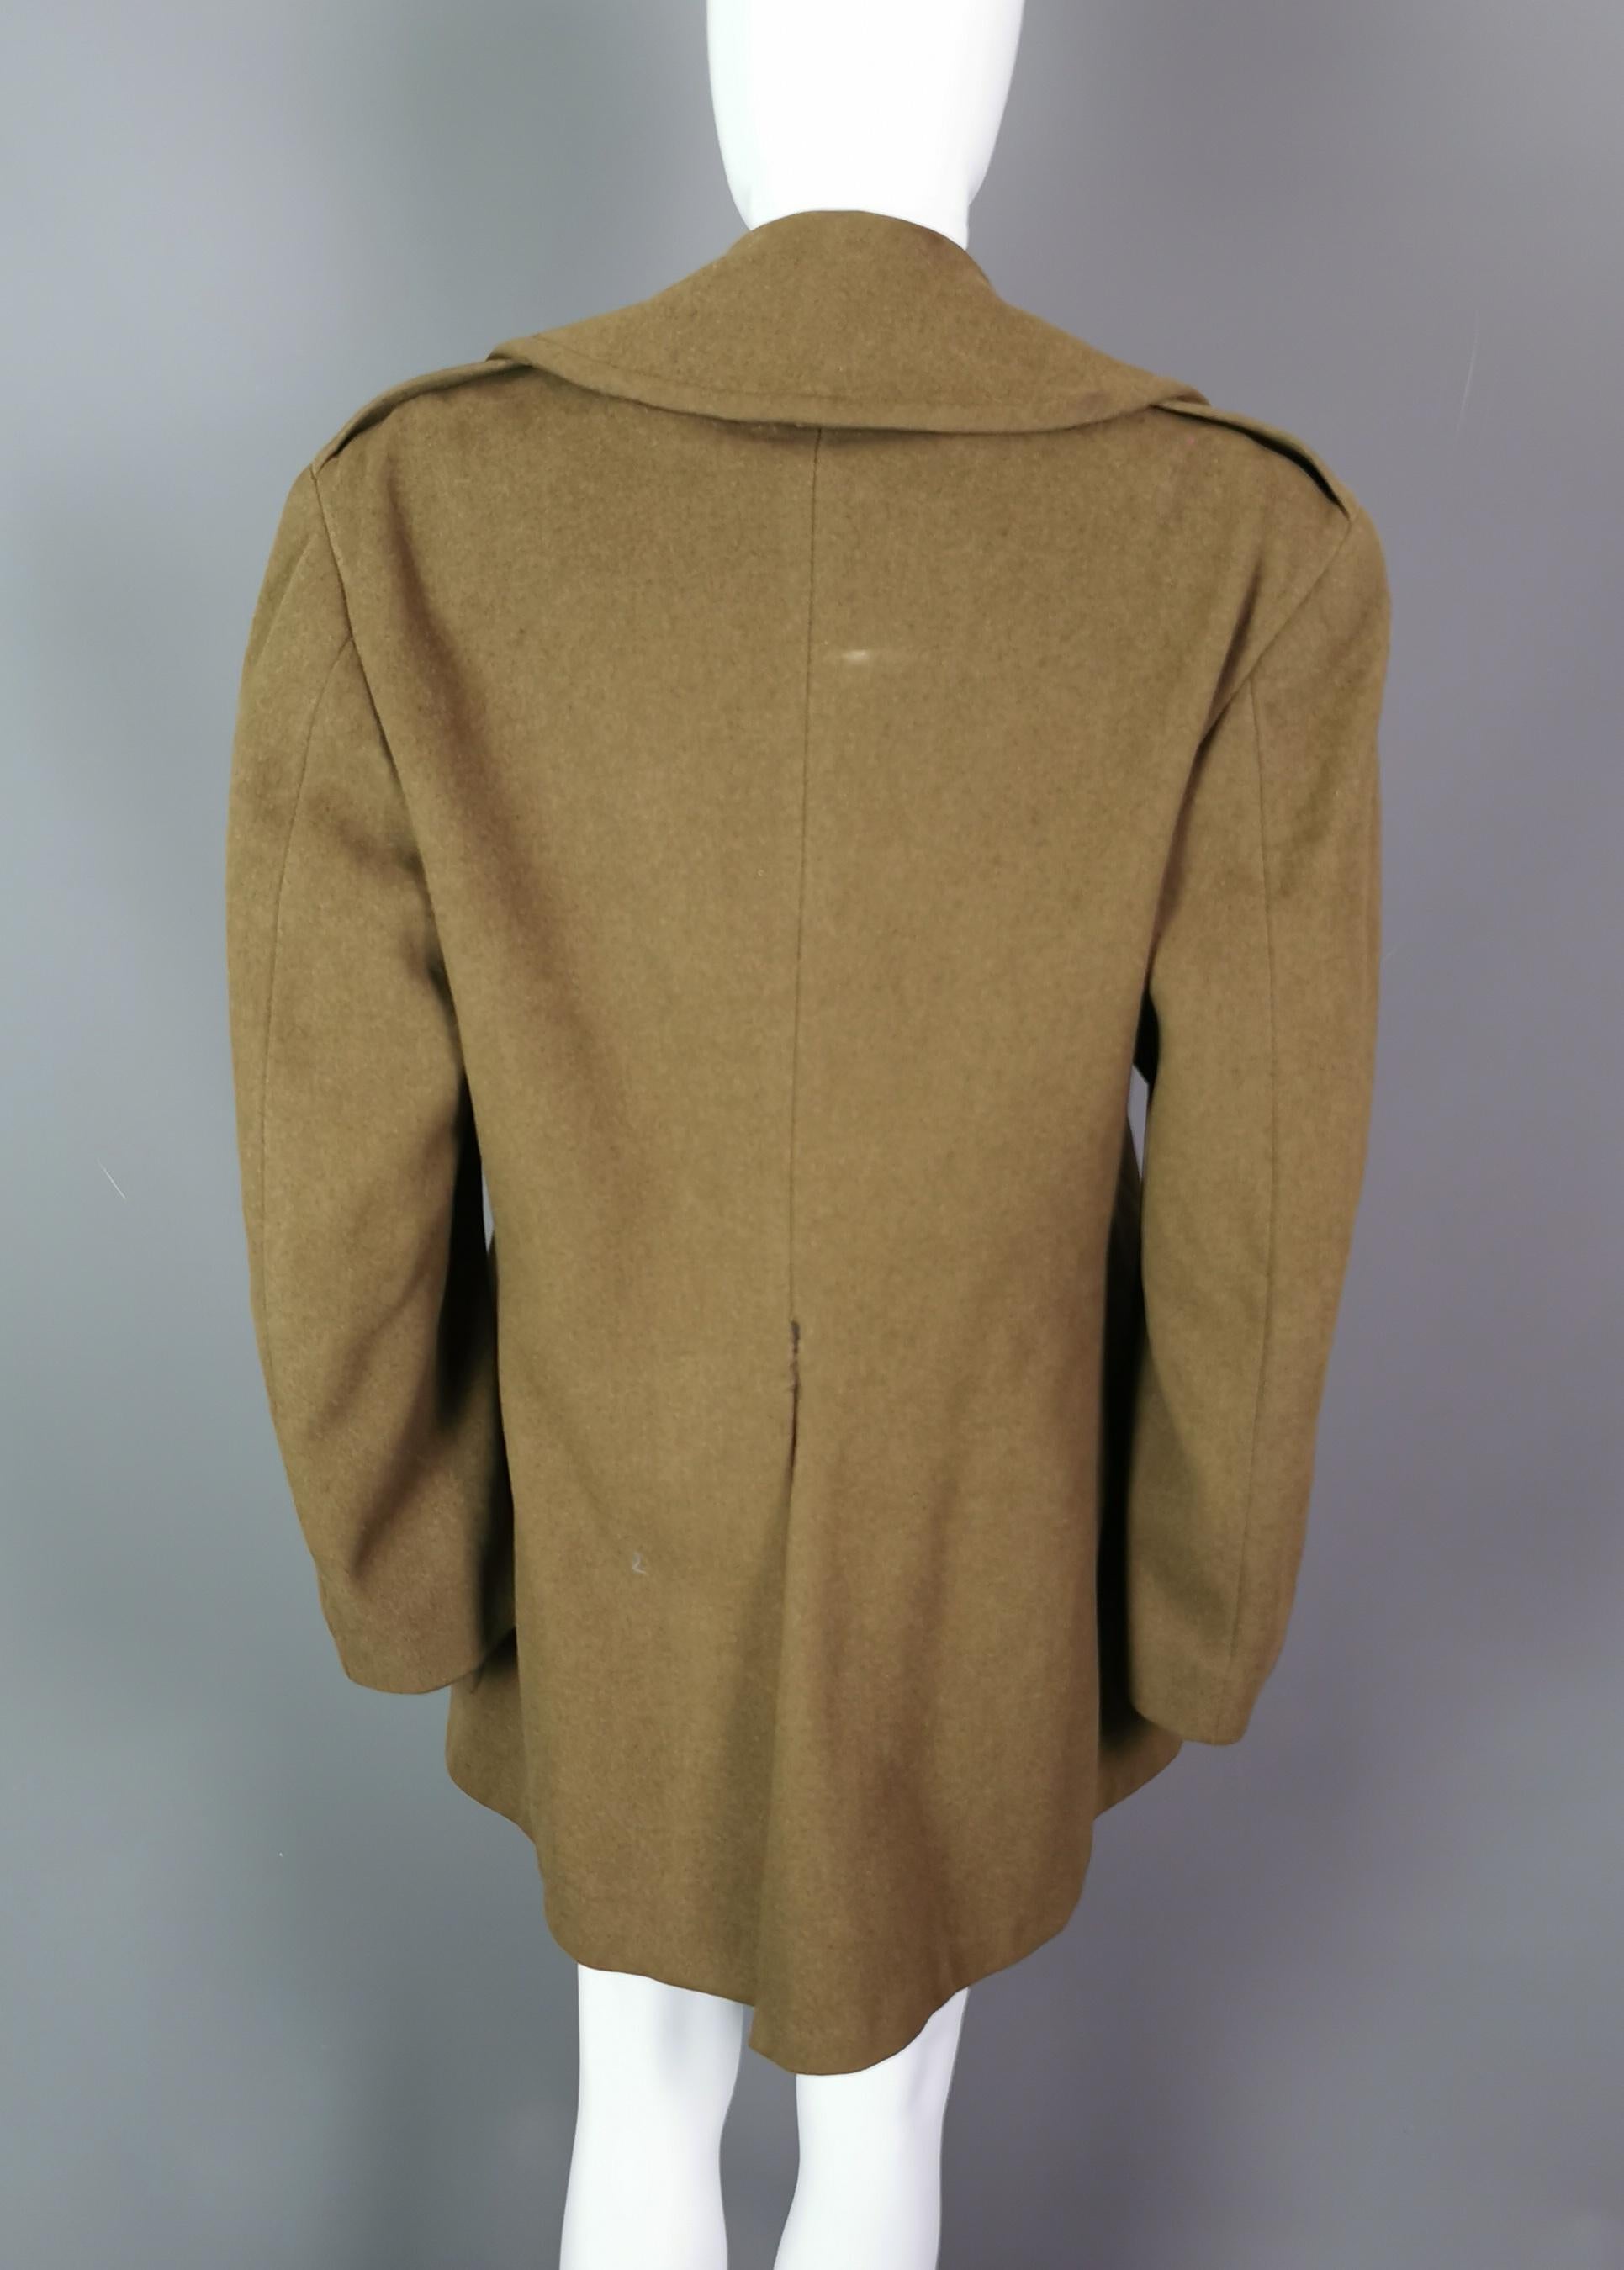 Men's Vintage WW2 Army officers overcoat, regulation 